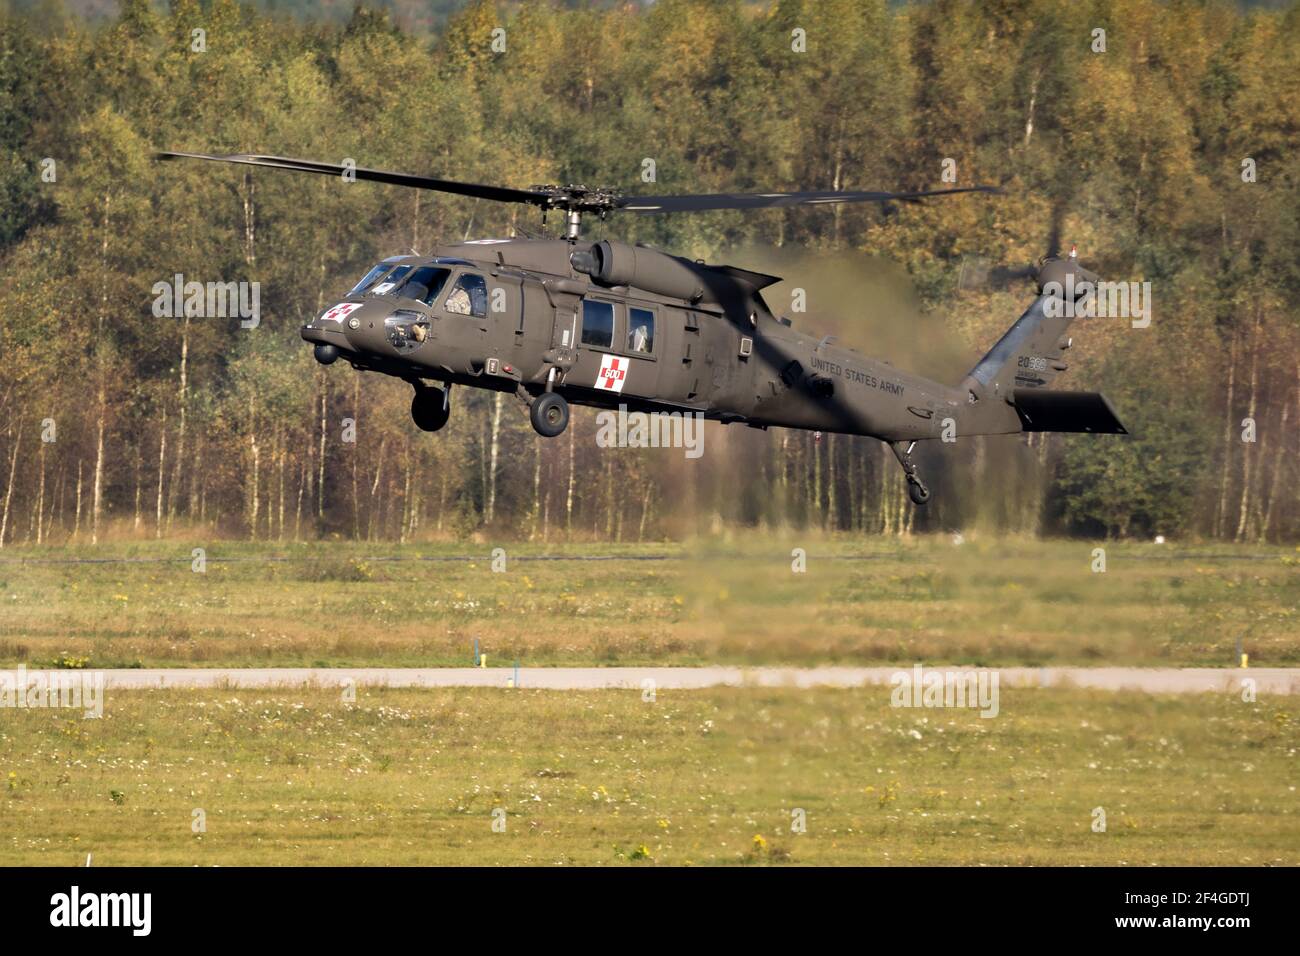 United States Army Sikorsky UH-60M Blackhawk medevac helicopter landing. The Netherlands - October 27, 2017 Stock Photo